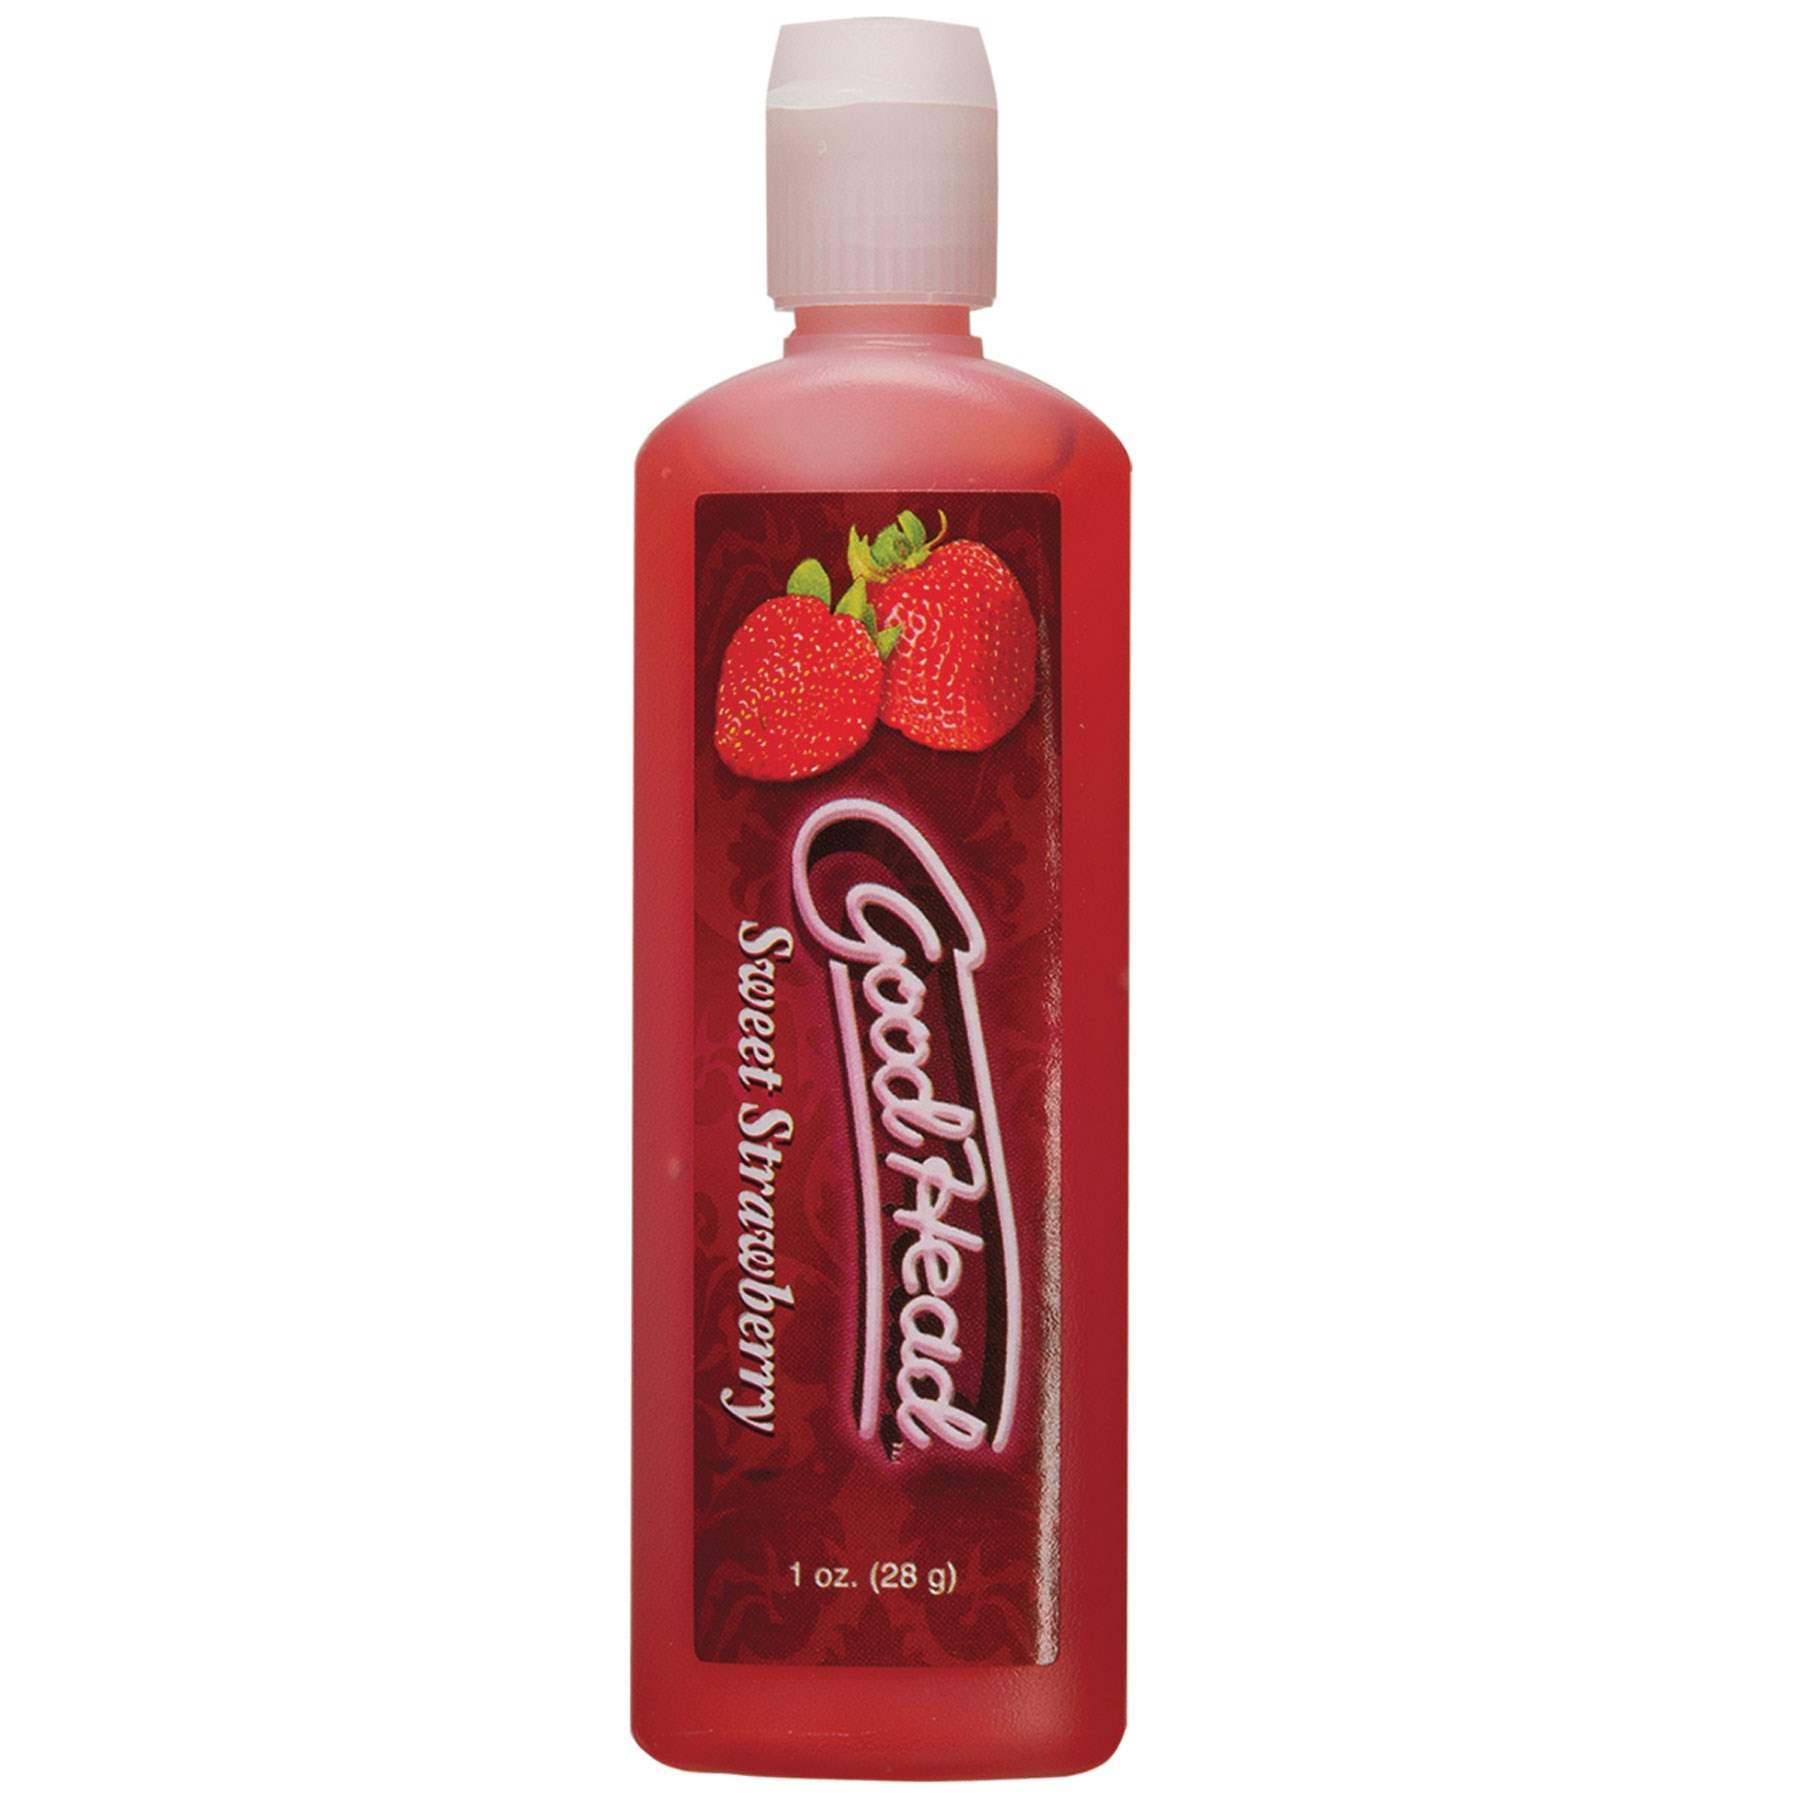 Goodhead Fundamentals Oral Sex strawberry flavored oral delight gel